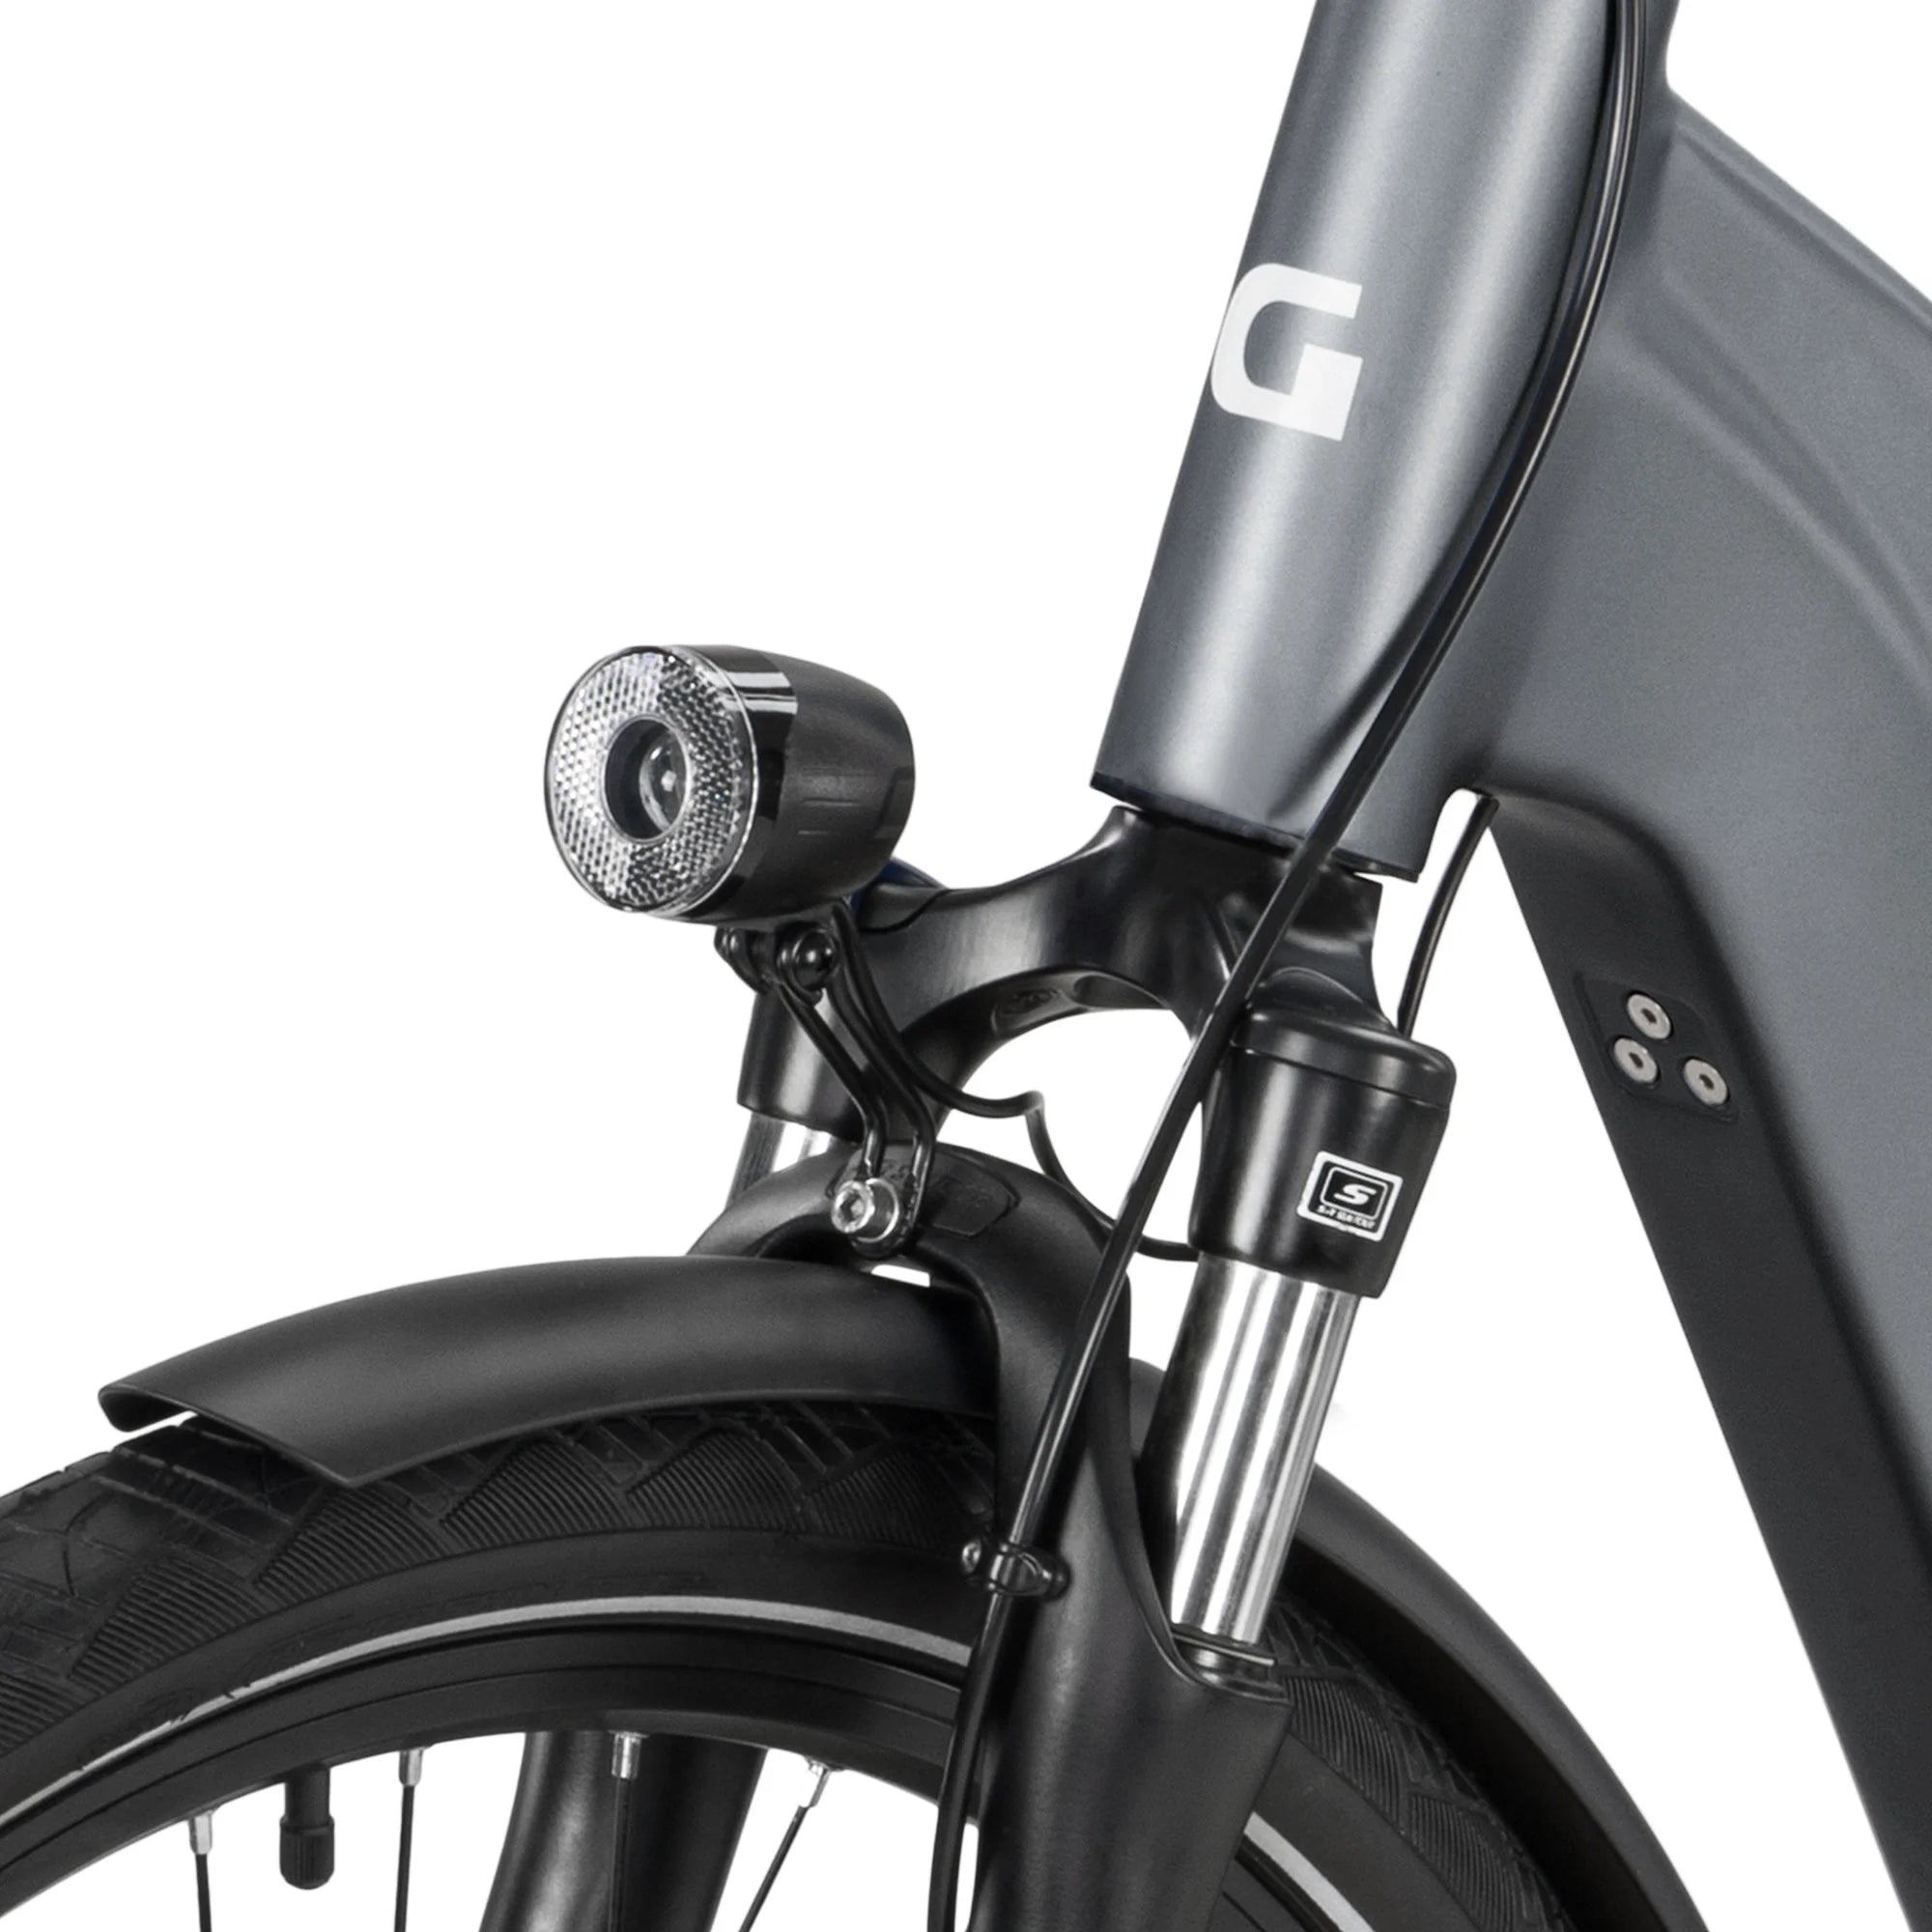 GRUNDIG GCB-1 Vélo électrique Gris clair